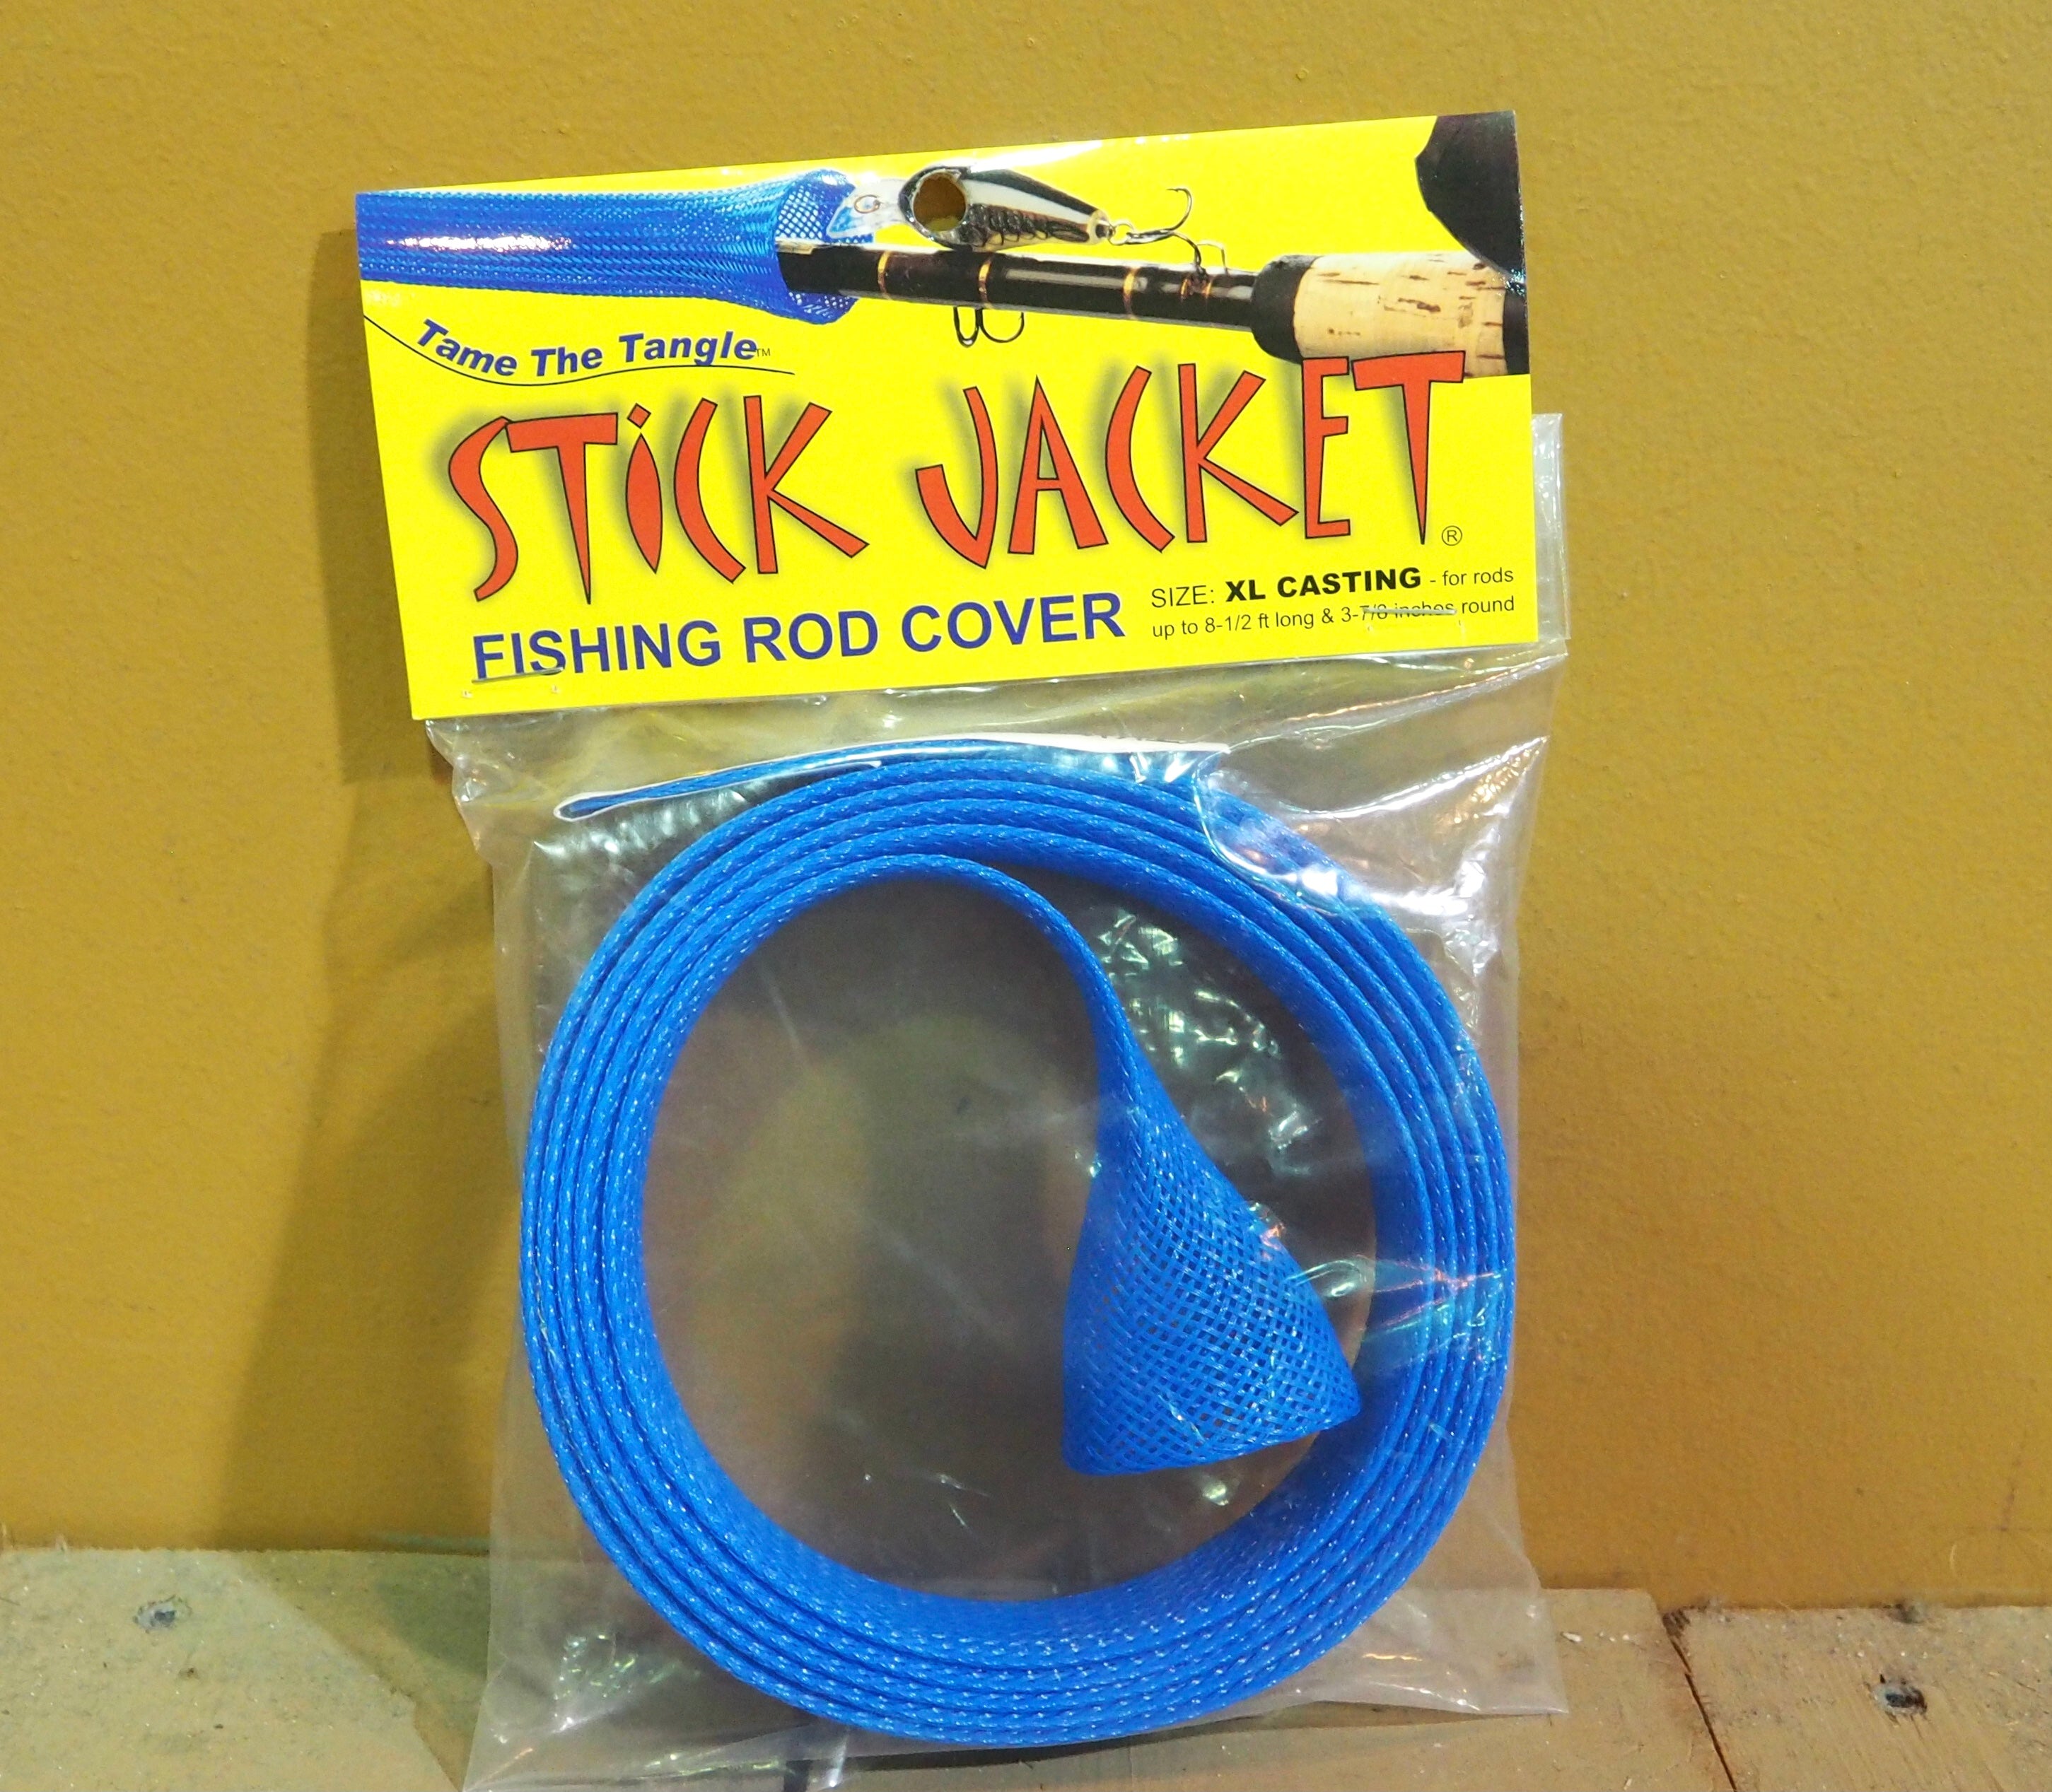 Stick Jacket Fishing Rod Cover XL Casting Size